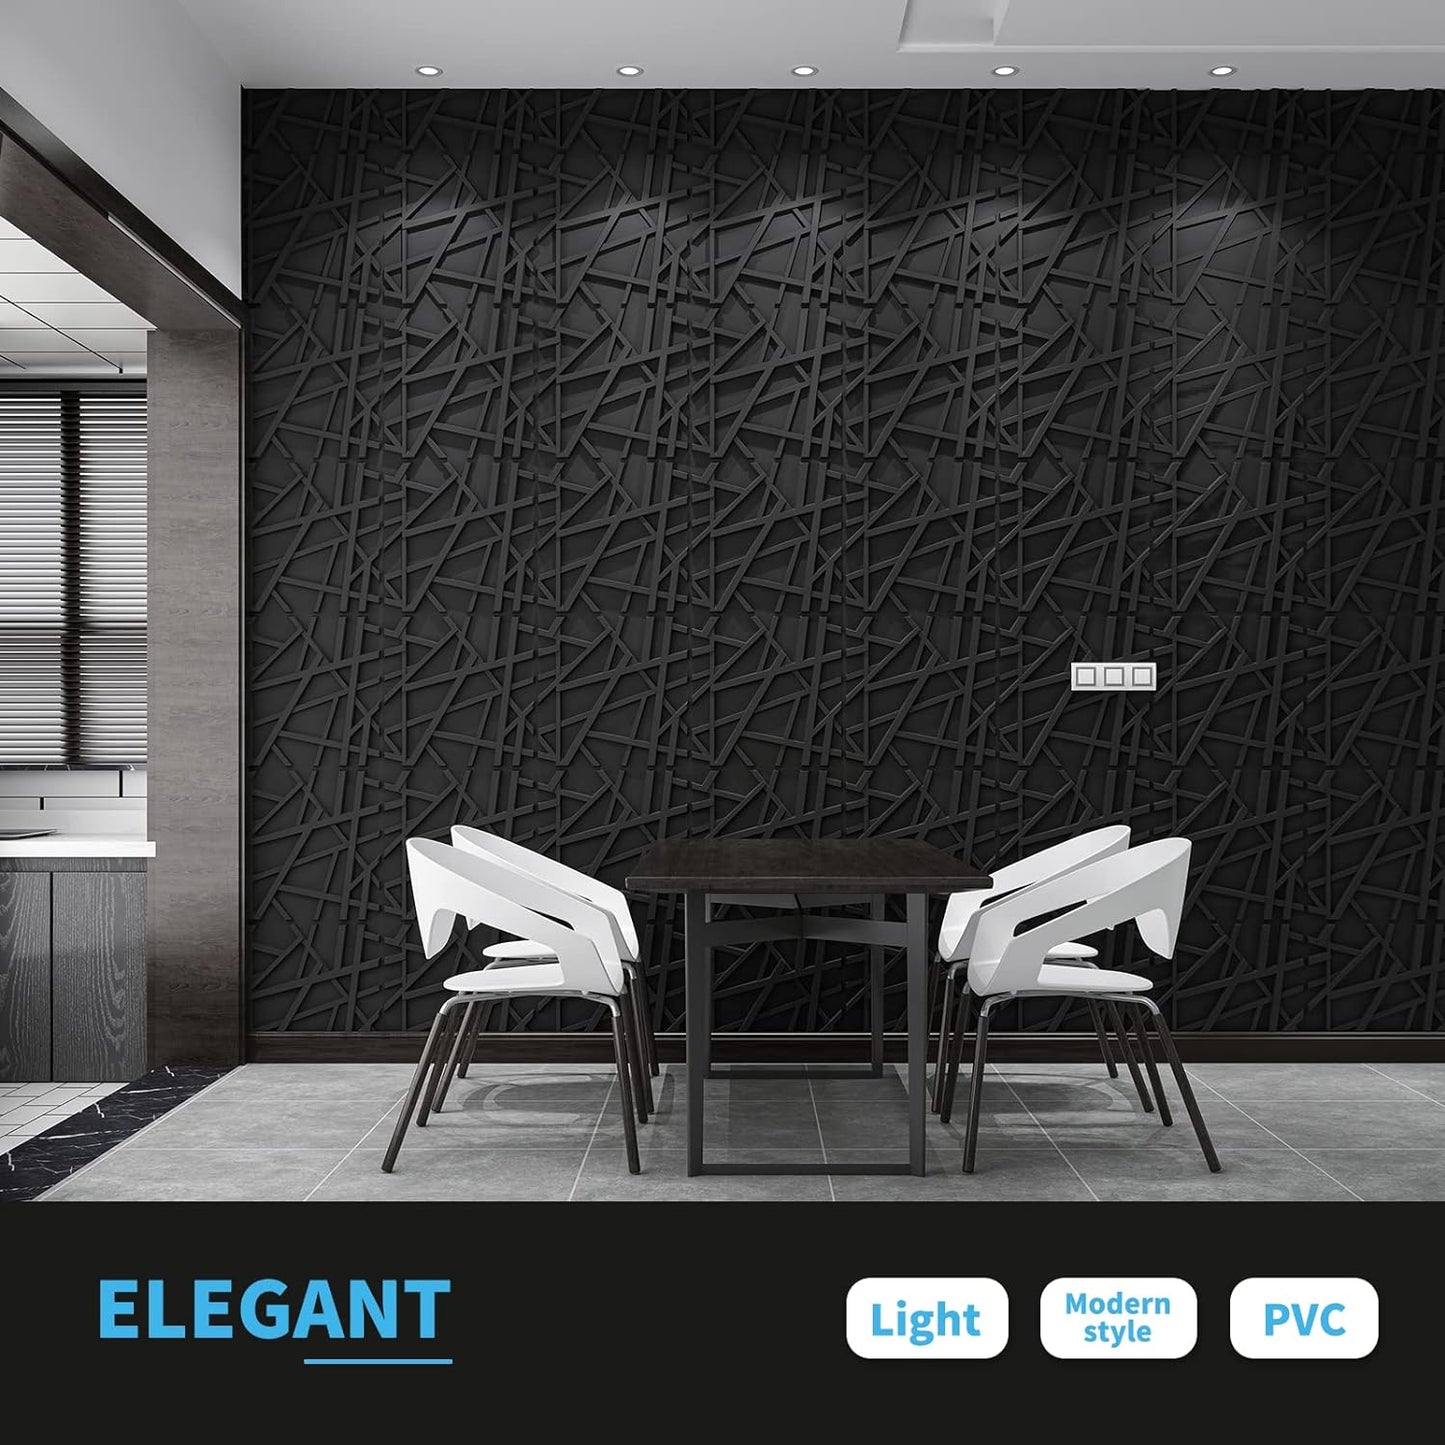 Art3d PVC Decorative Textures Black 3D Wall Panels for Interior Wall Décor, Black Wall Decor,Pack of 12 Tiles 32 Sq Ft